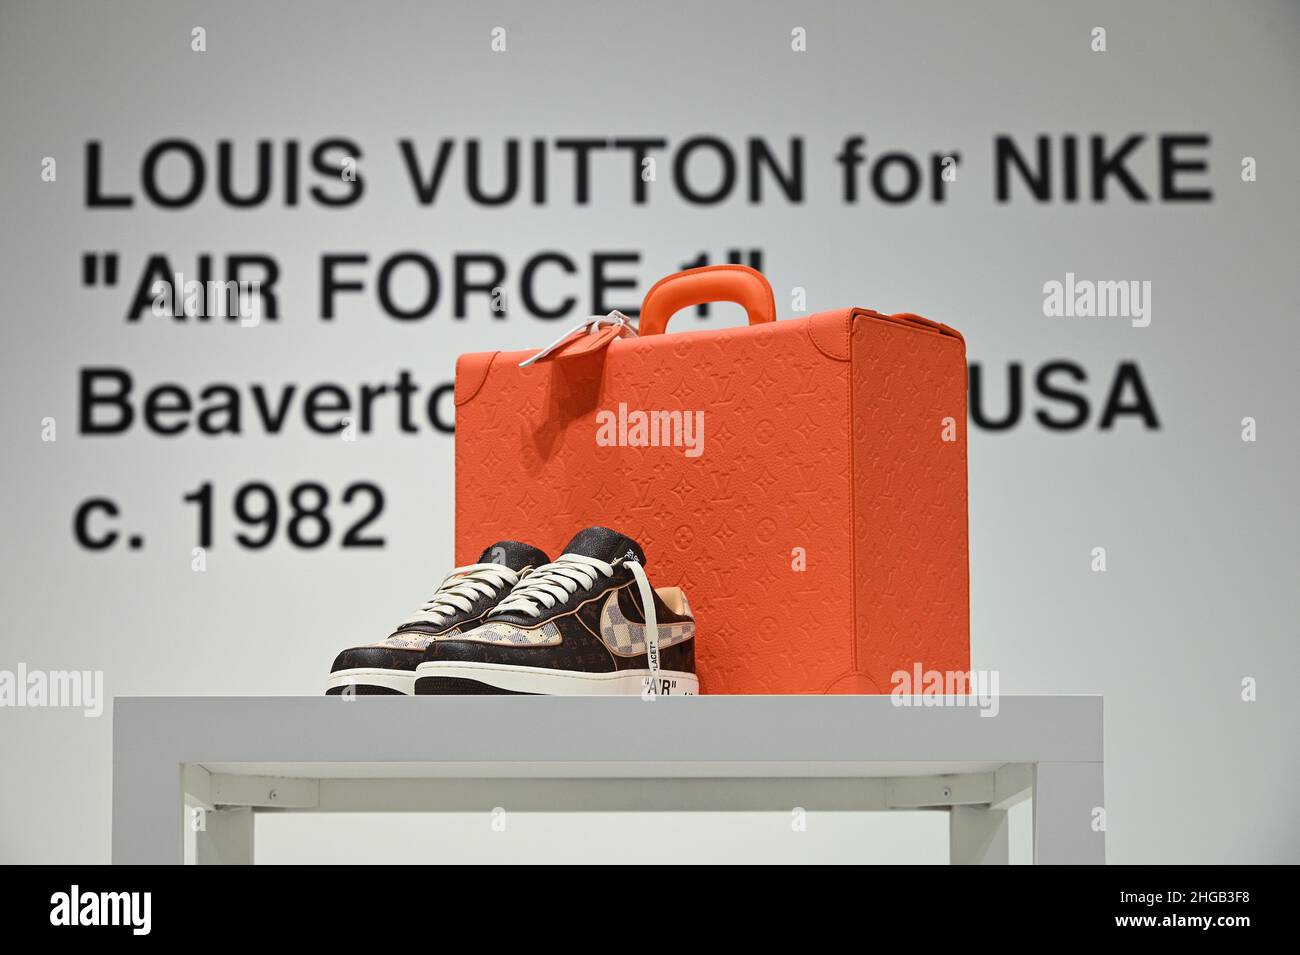 Louis Vuitton and Nike Launch Virgil Abloh's Air Force 1